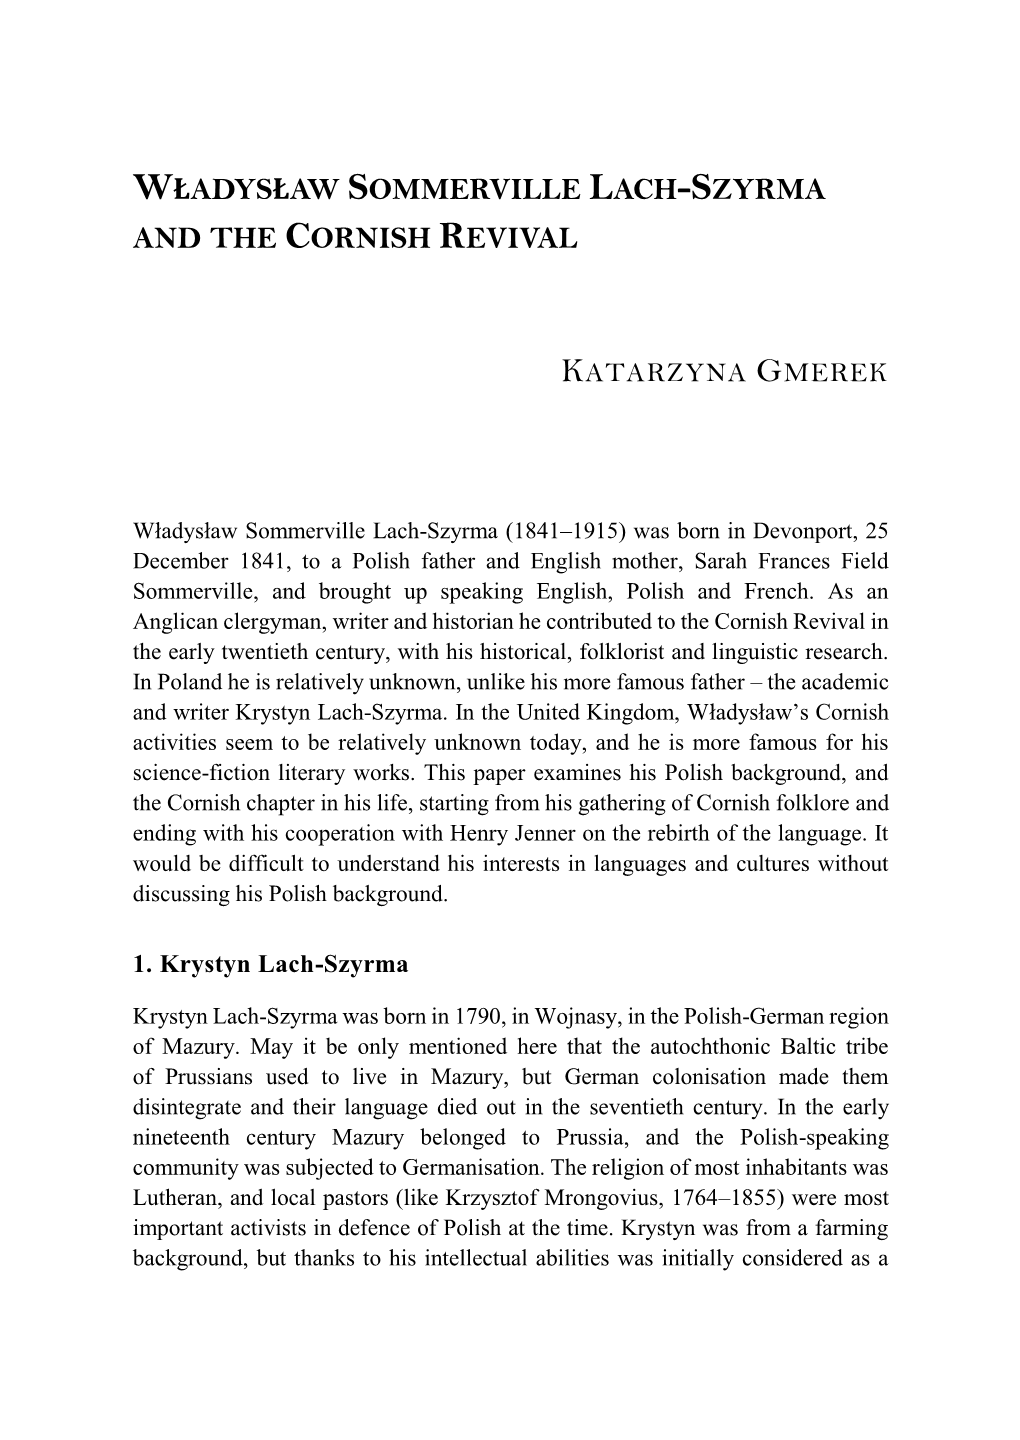 Władysław Sommerville Lach-Szyrma and the Cornish Revival